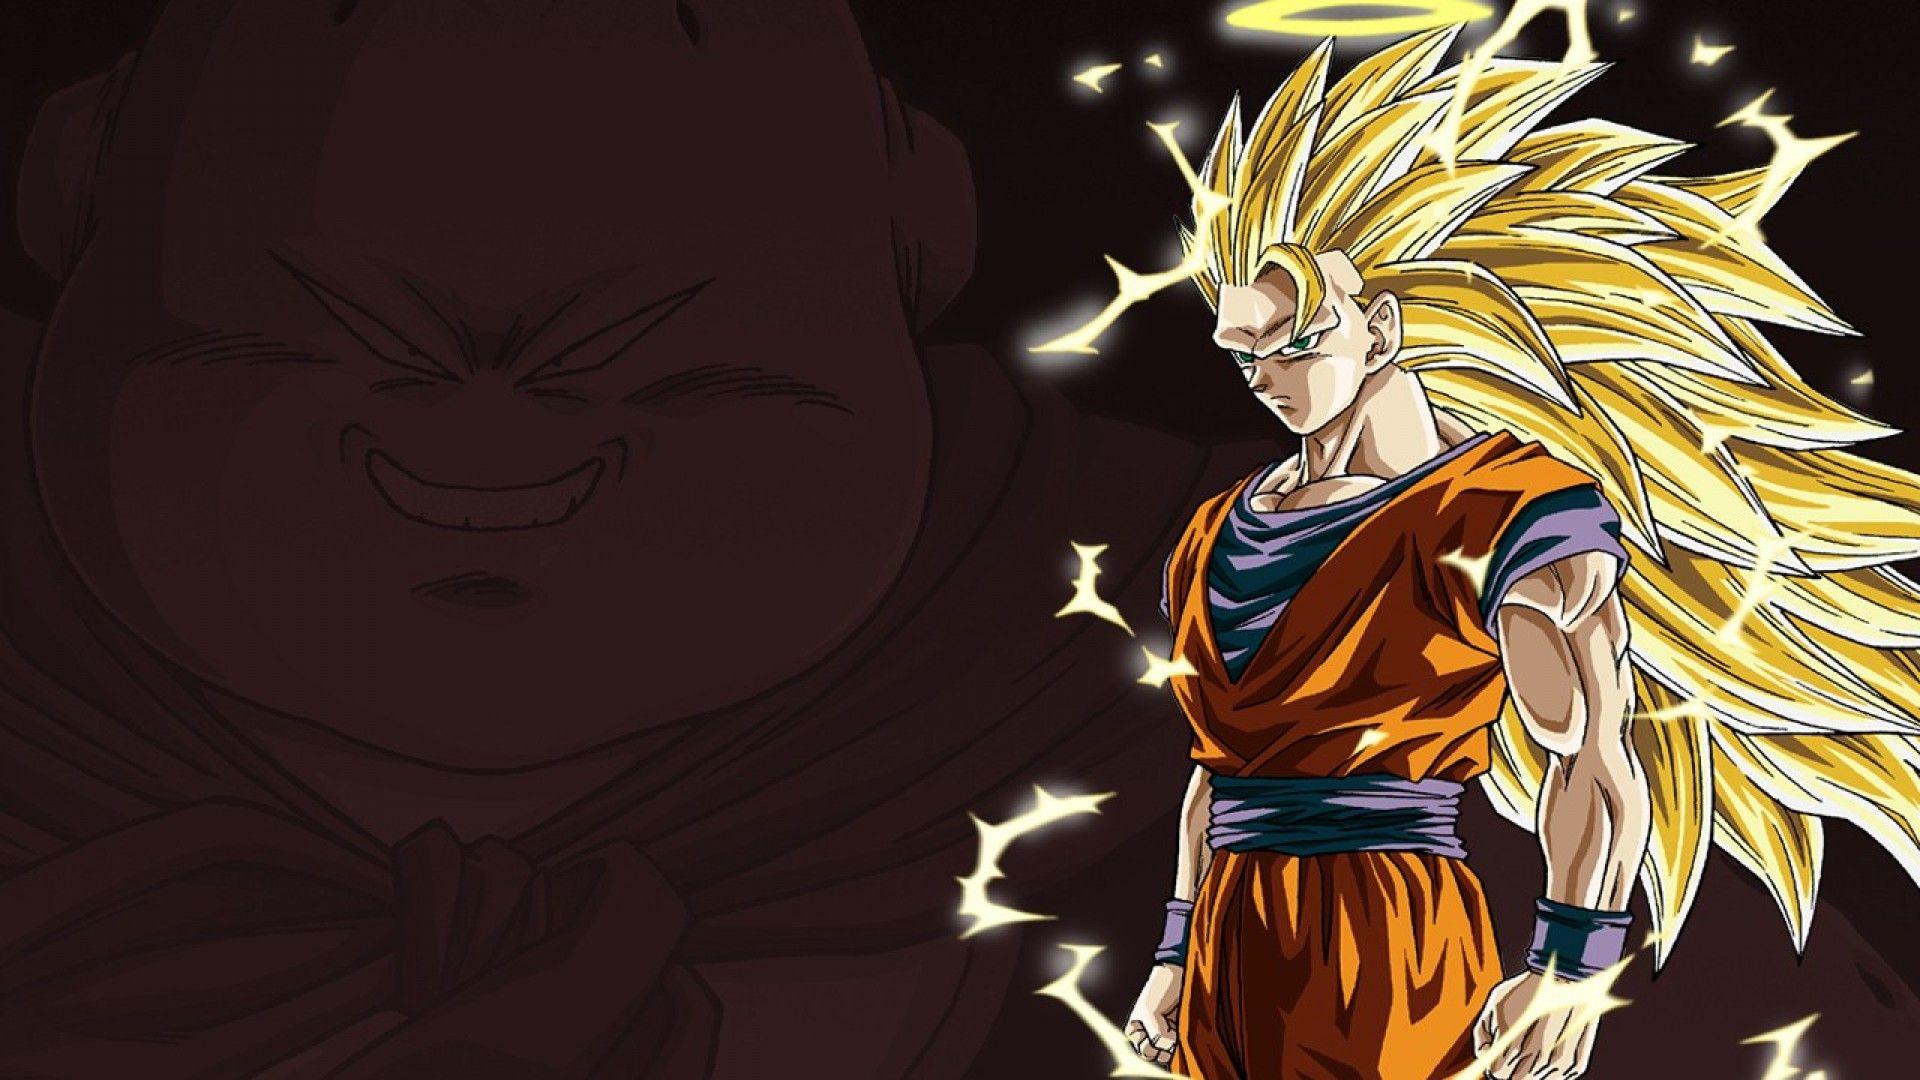 Free Download Goku Dragon Ball Z Backgrounds